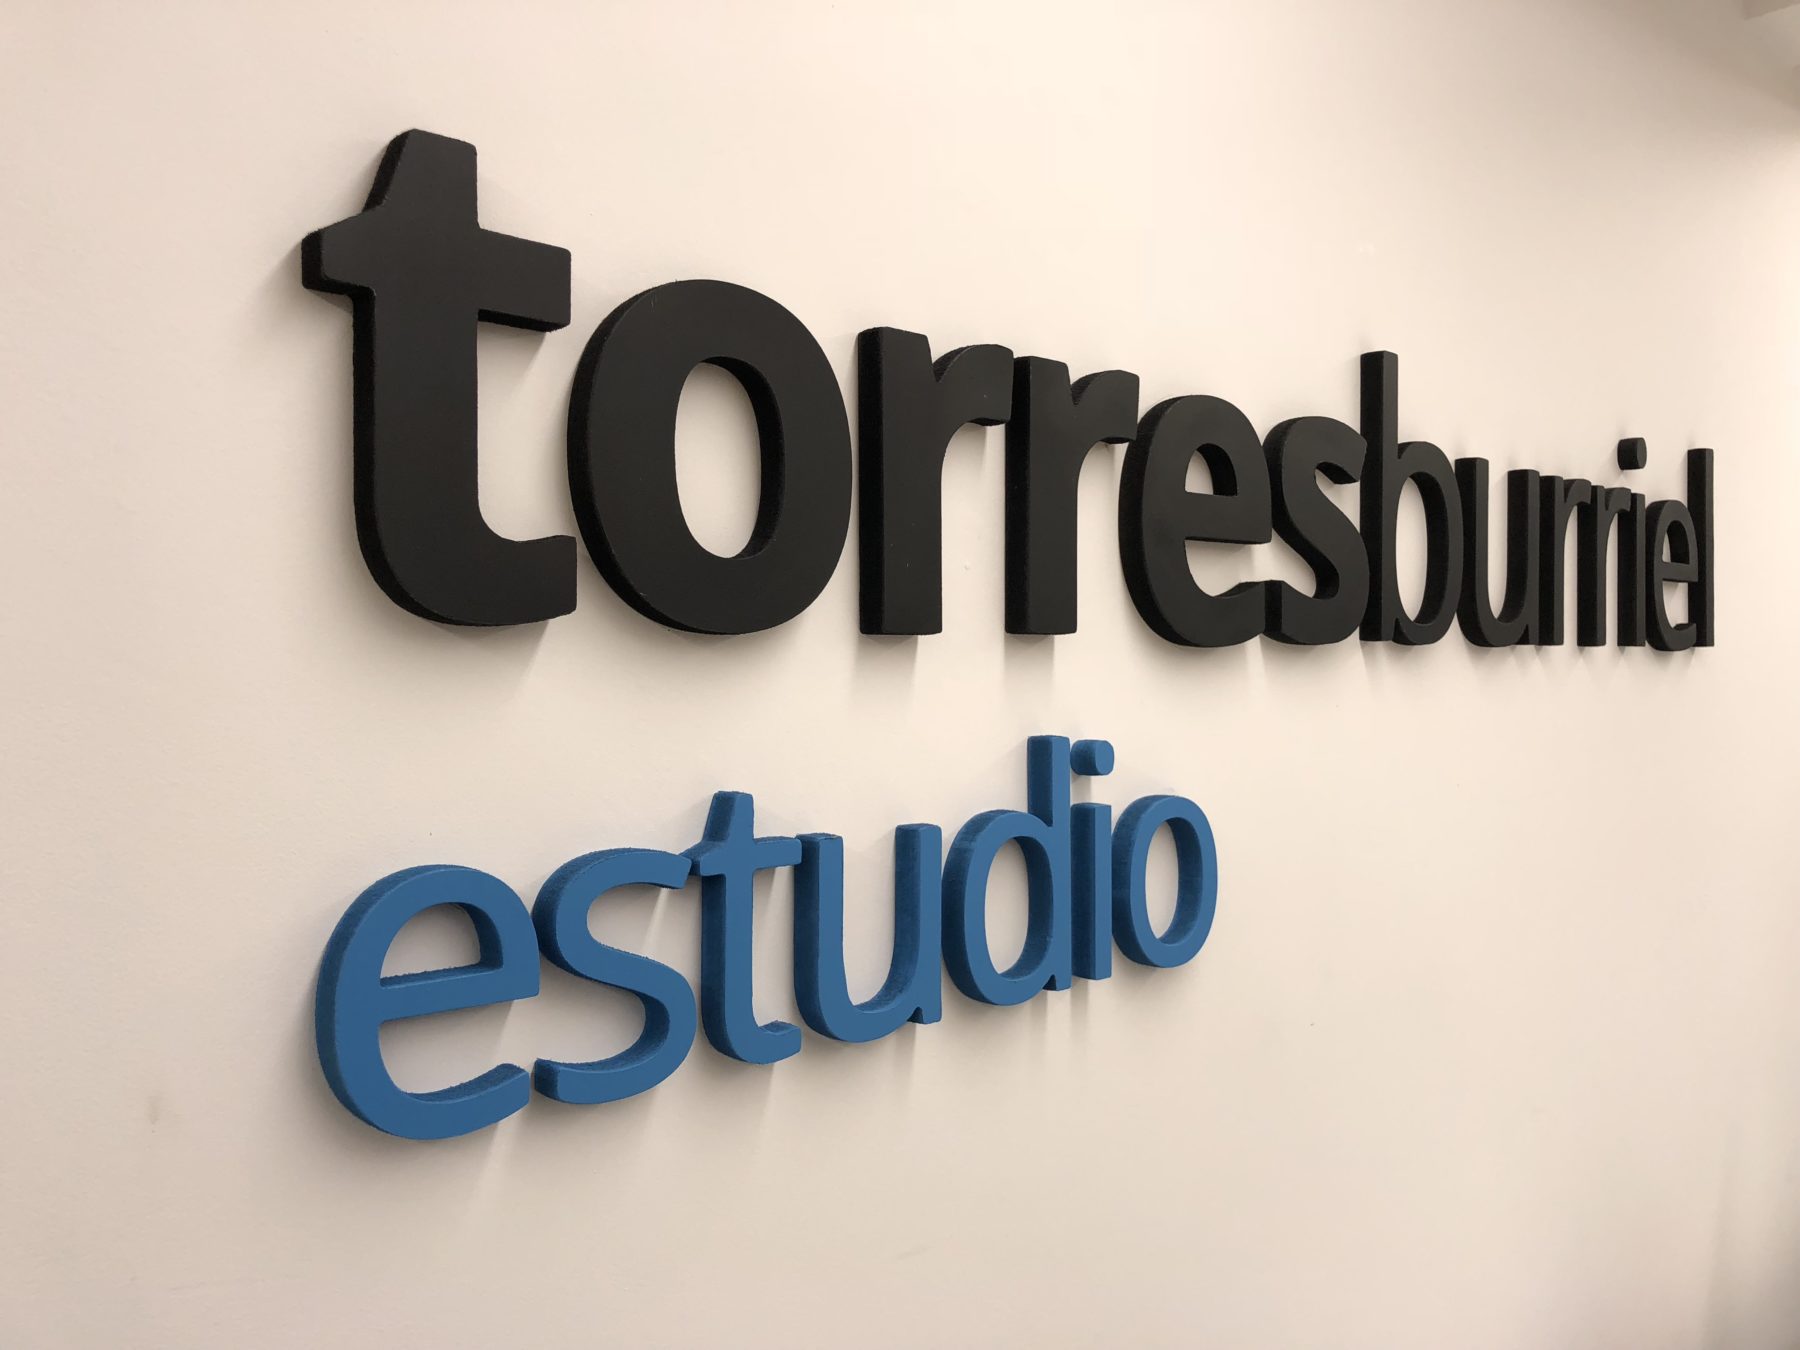 El logotipo de Torresburriel Estudio.